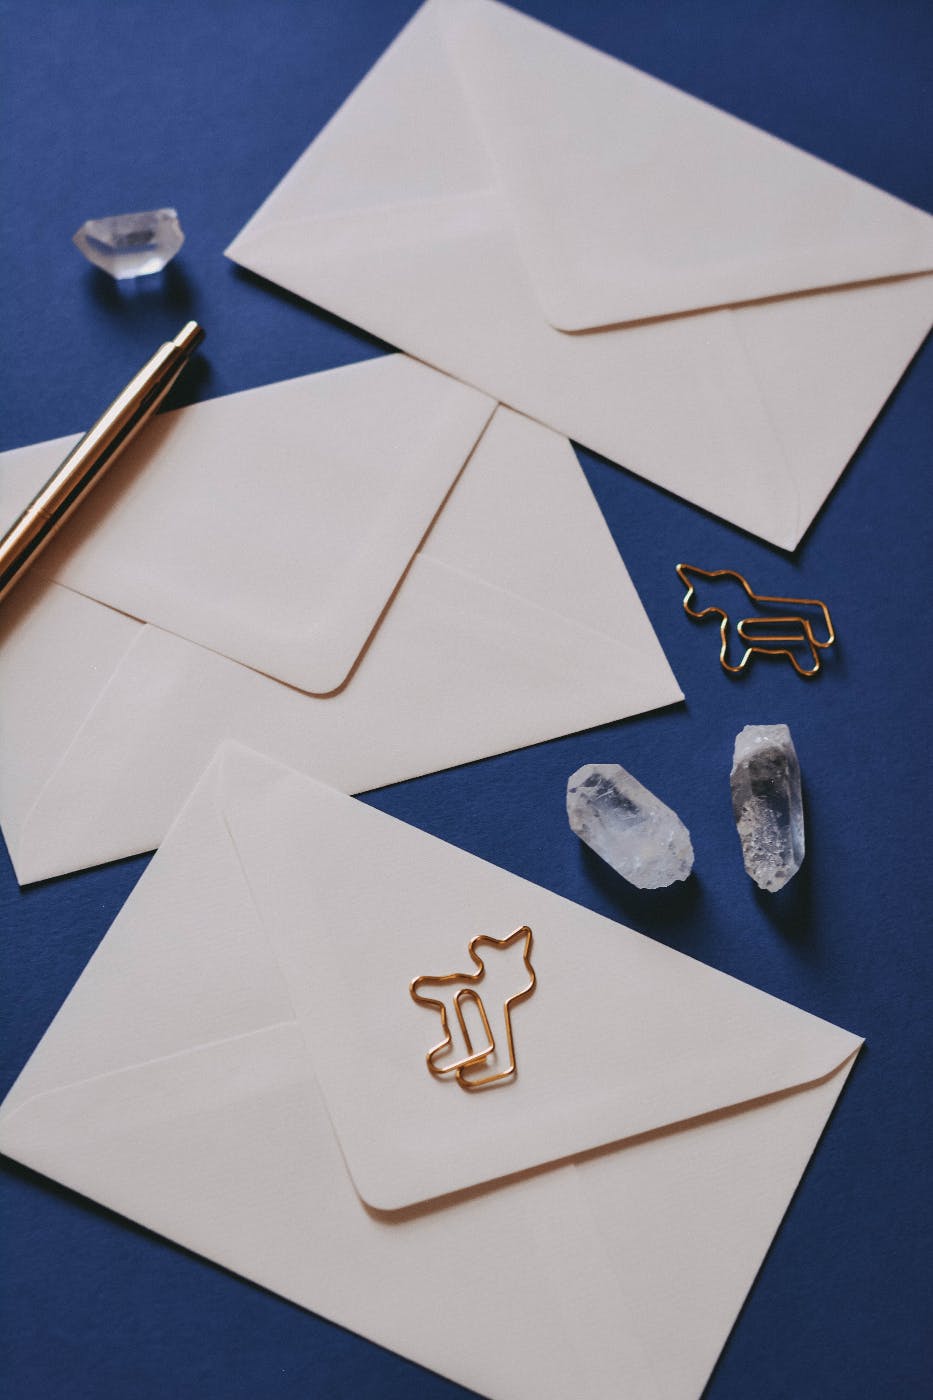 envelopes, paper and pen